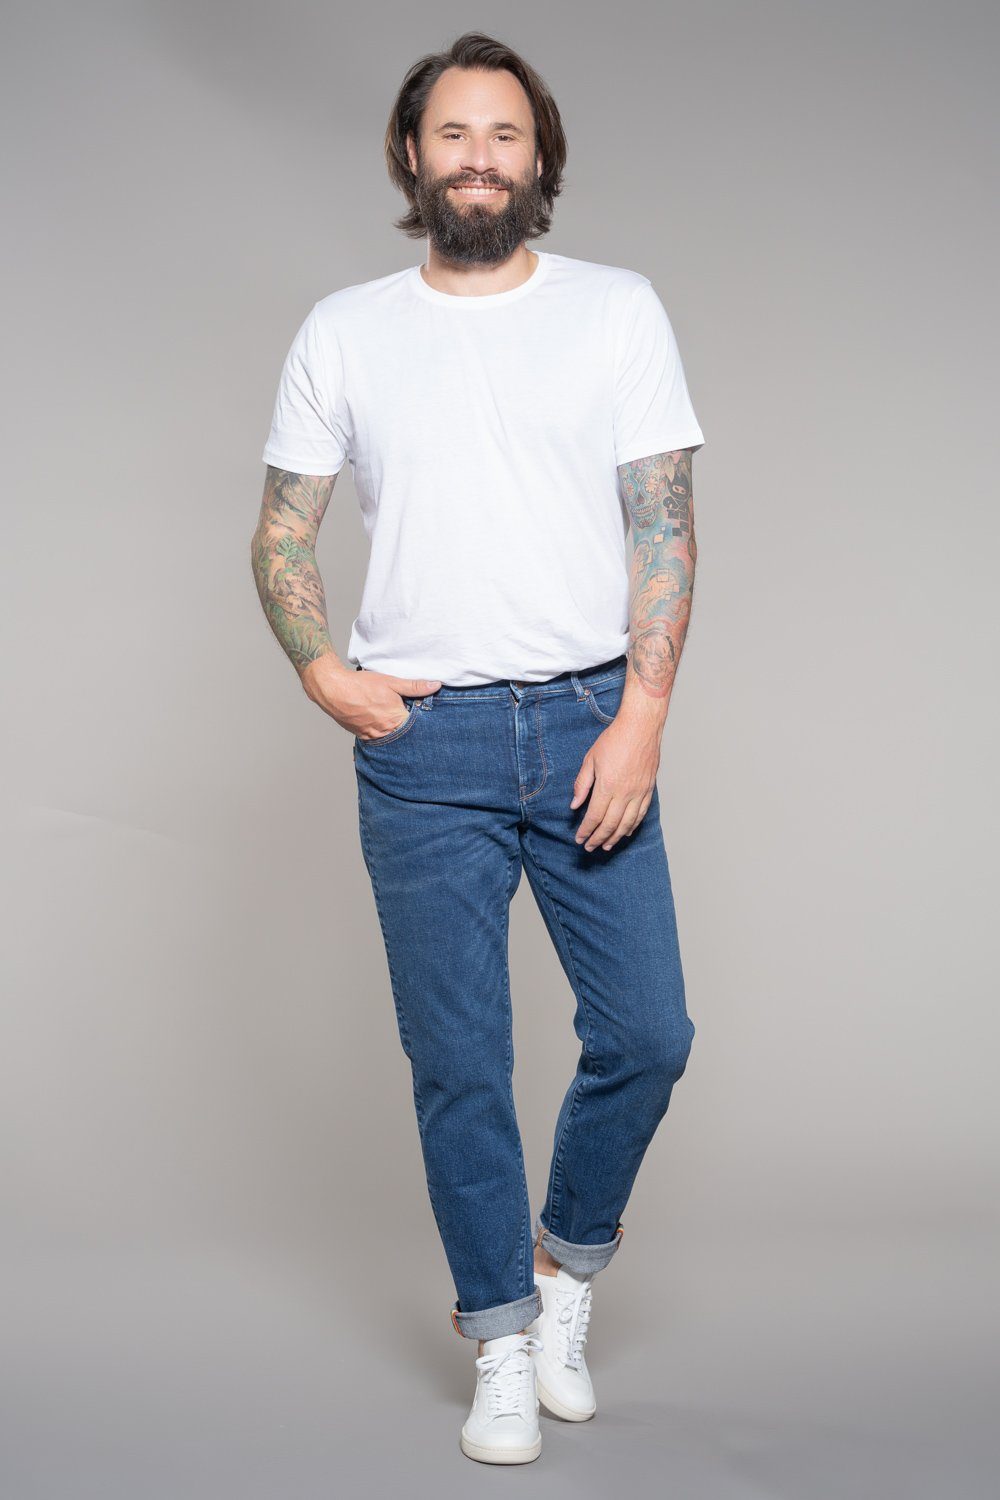 Feuervogl Slim-fit-Jeans fv-West:minster, Slim Fit, Medium Waist, Unisex Slim Fit, Unisex, 5-Pocket-Style, Medium Waist Fashion Blue